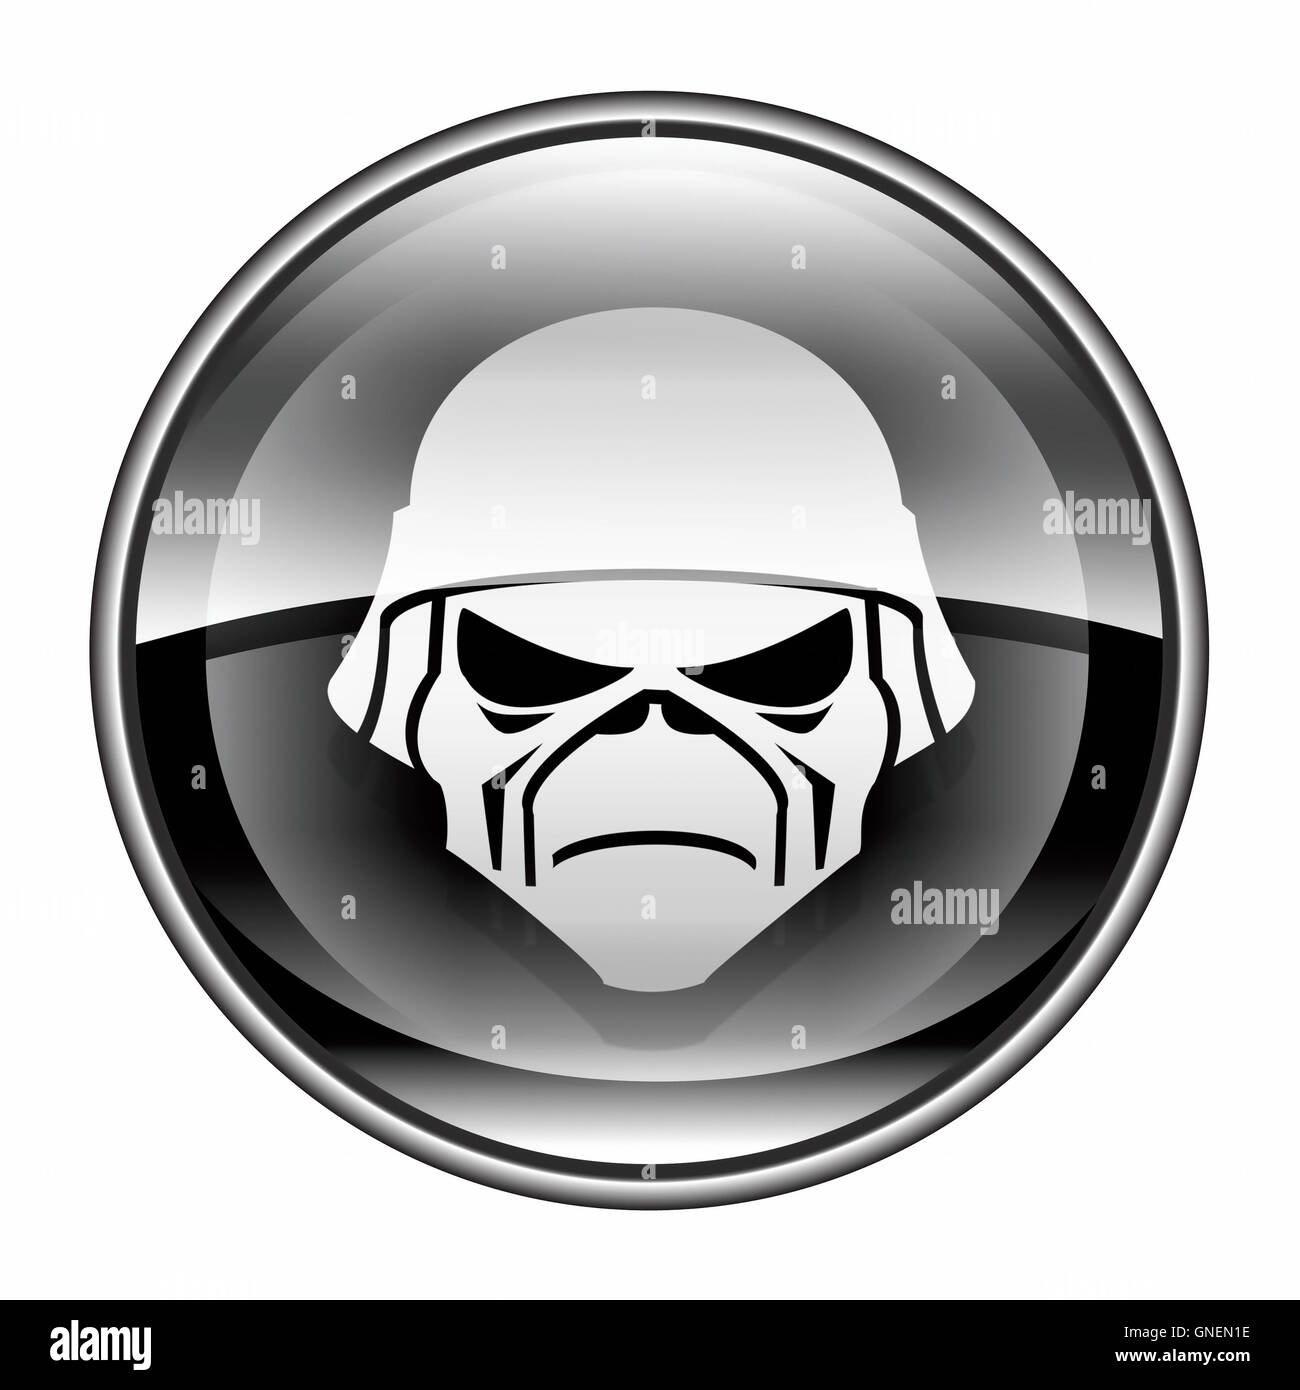 Army icon black, isolated on white background Stock Photo